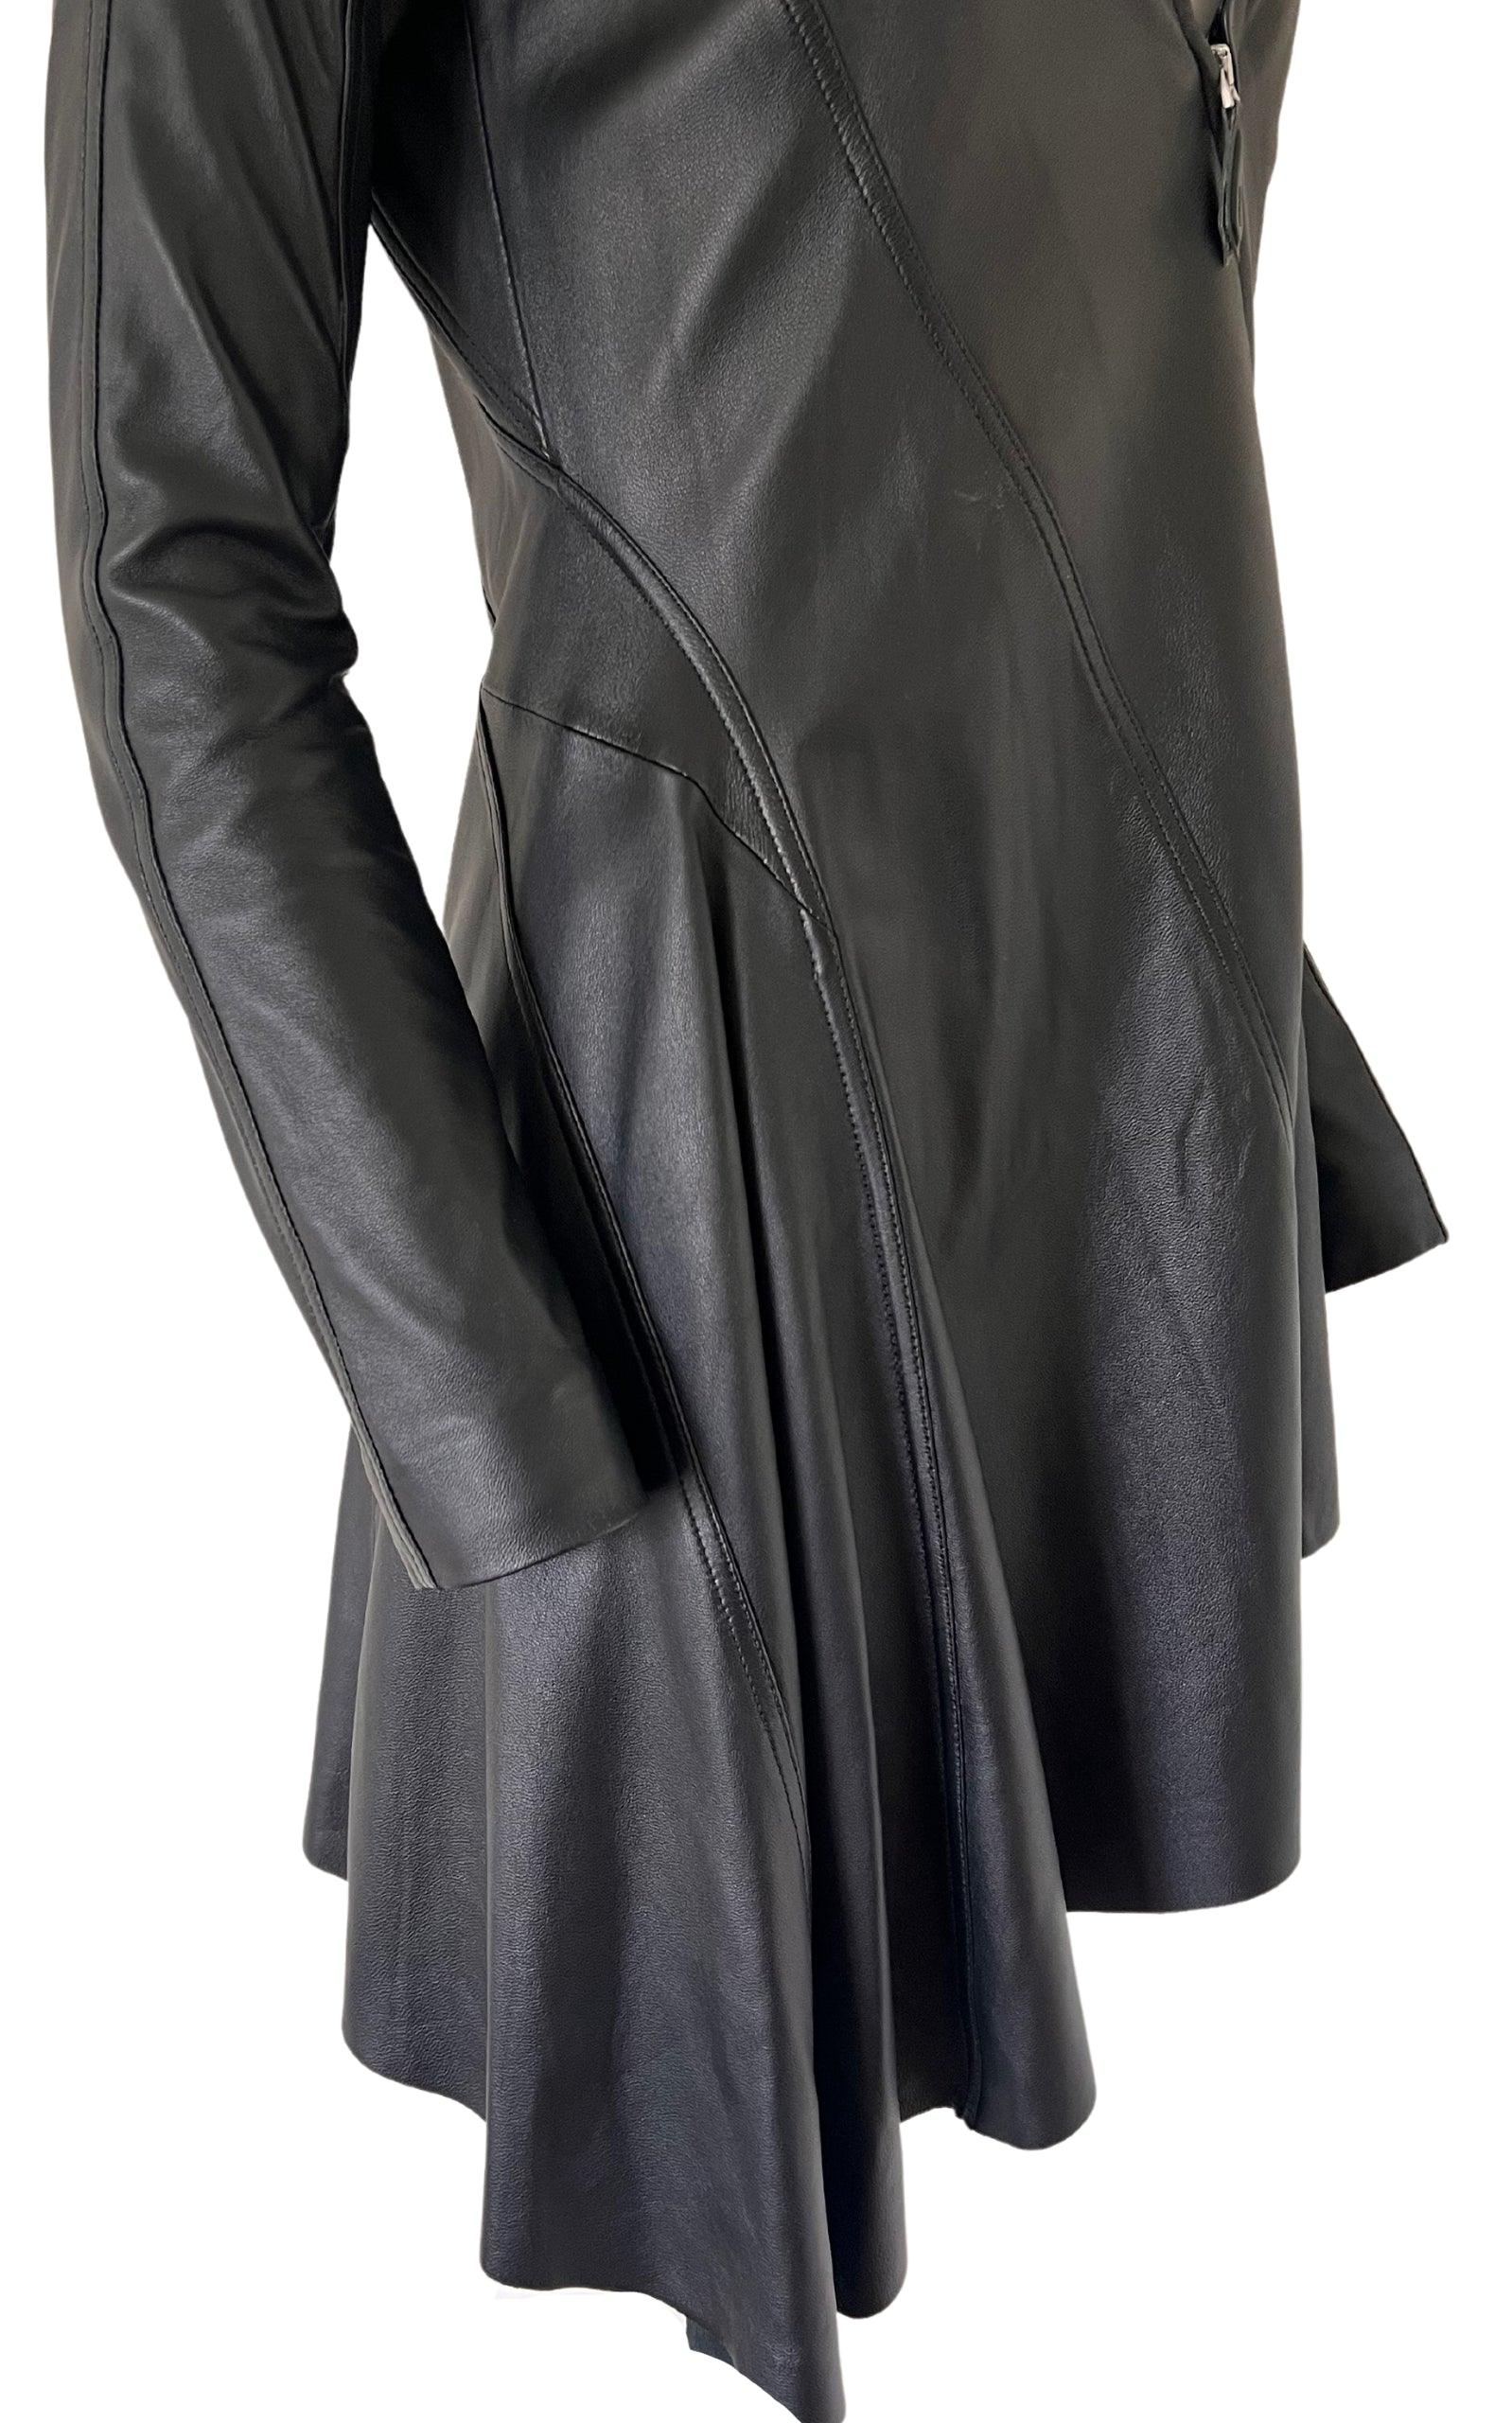  MuglerRunway Leather Dress Zip Closure - Runway Catalog